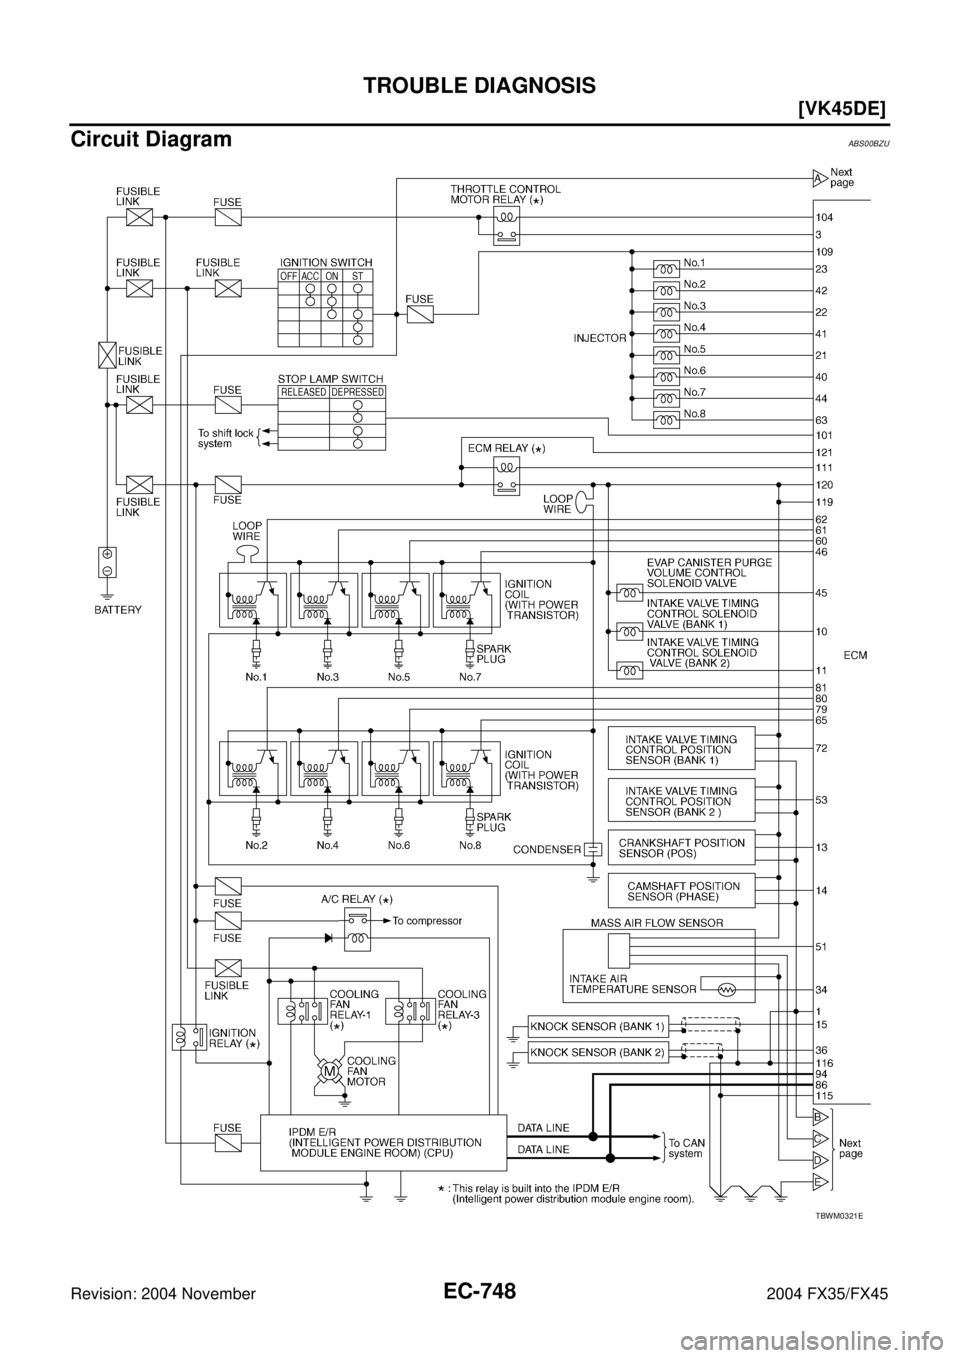 INFINITI FX35 2004  Service Manual EC-748
[VK45DE]
TROUBLE DIAGNOSIS
Revision: 2004 November 2004 FX35/FX45
Circuit DiagramABS00BZU
TBWM0321E 